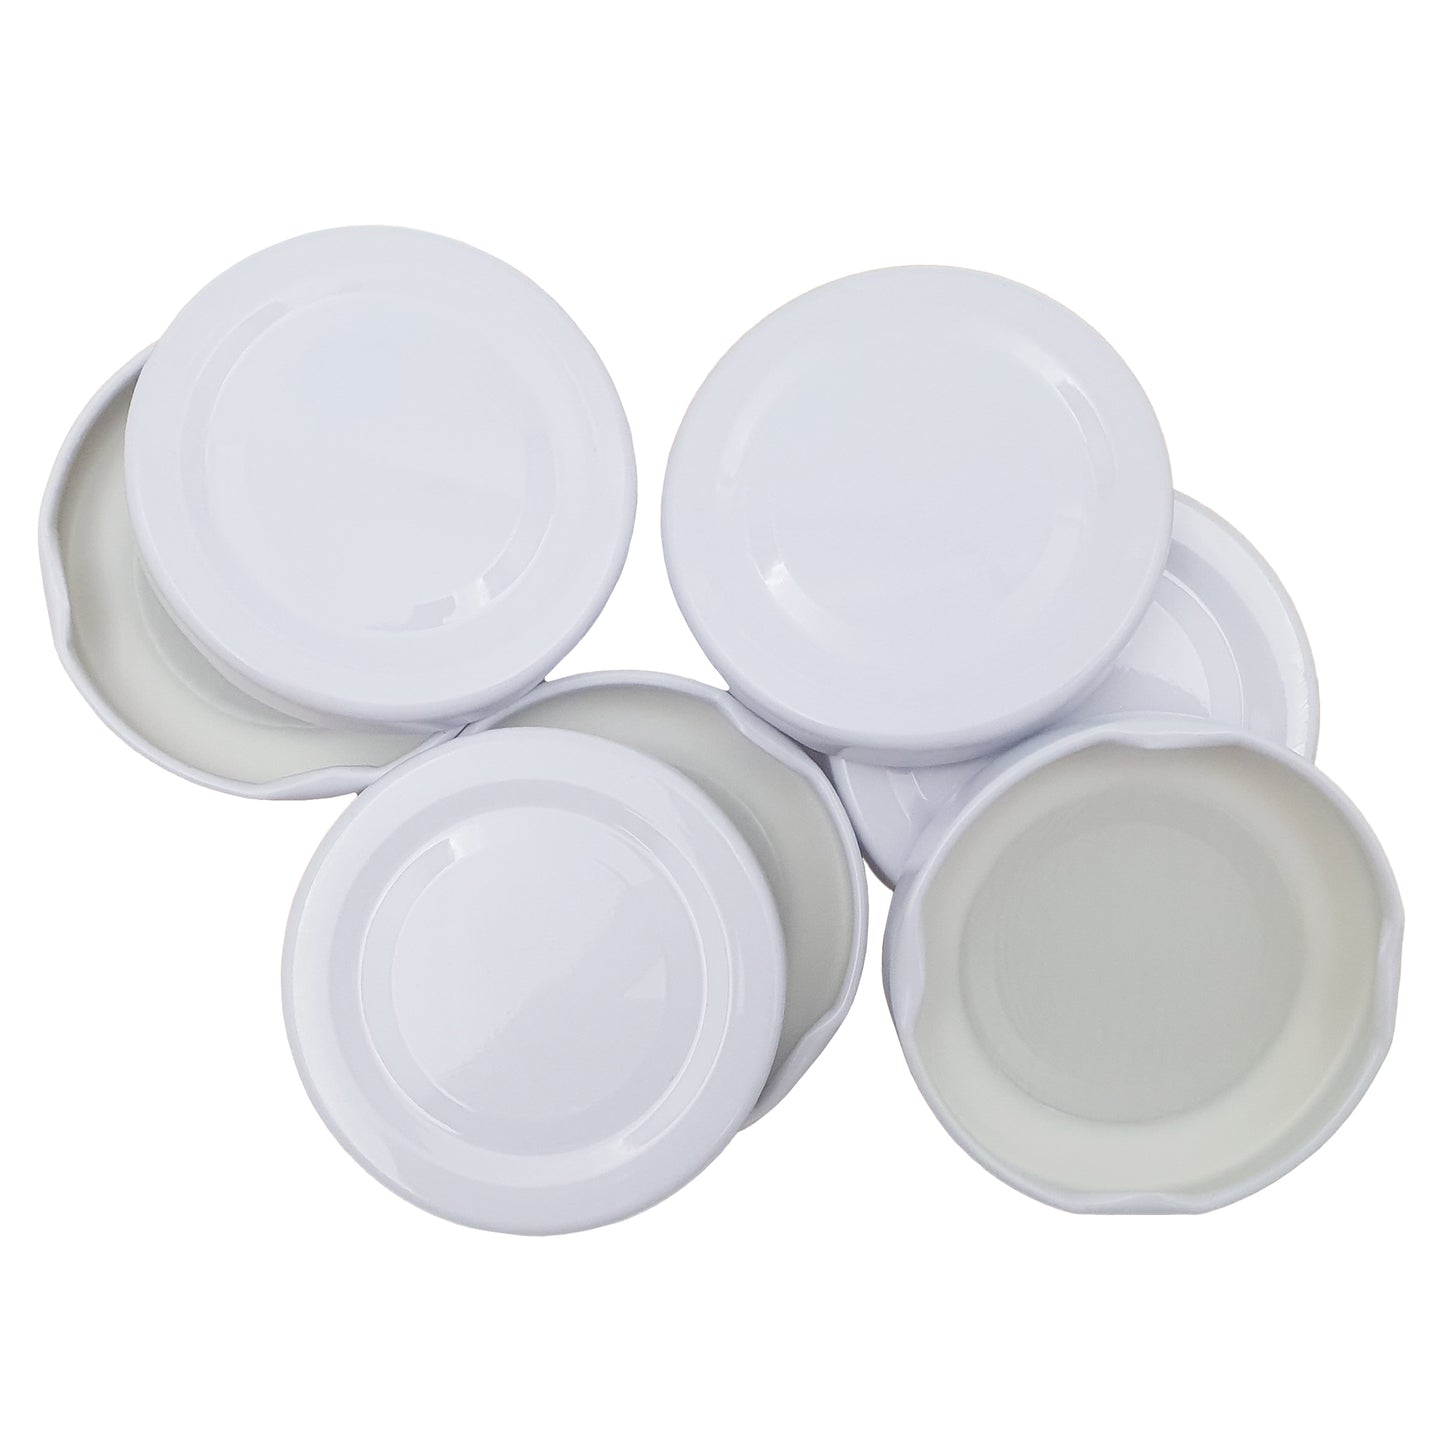 100 53mm white metal lids to suit the 720ml passata jars 